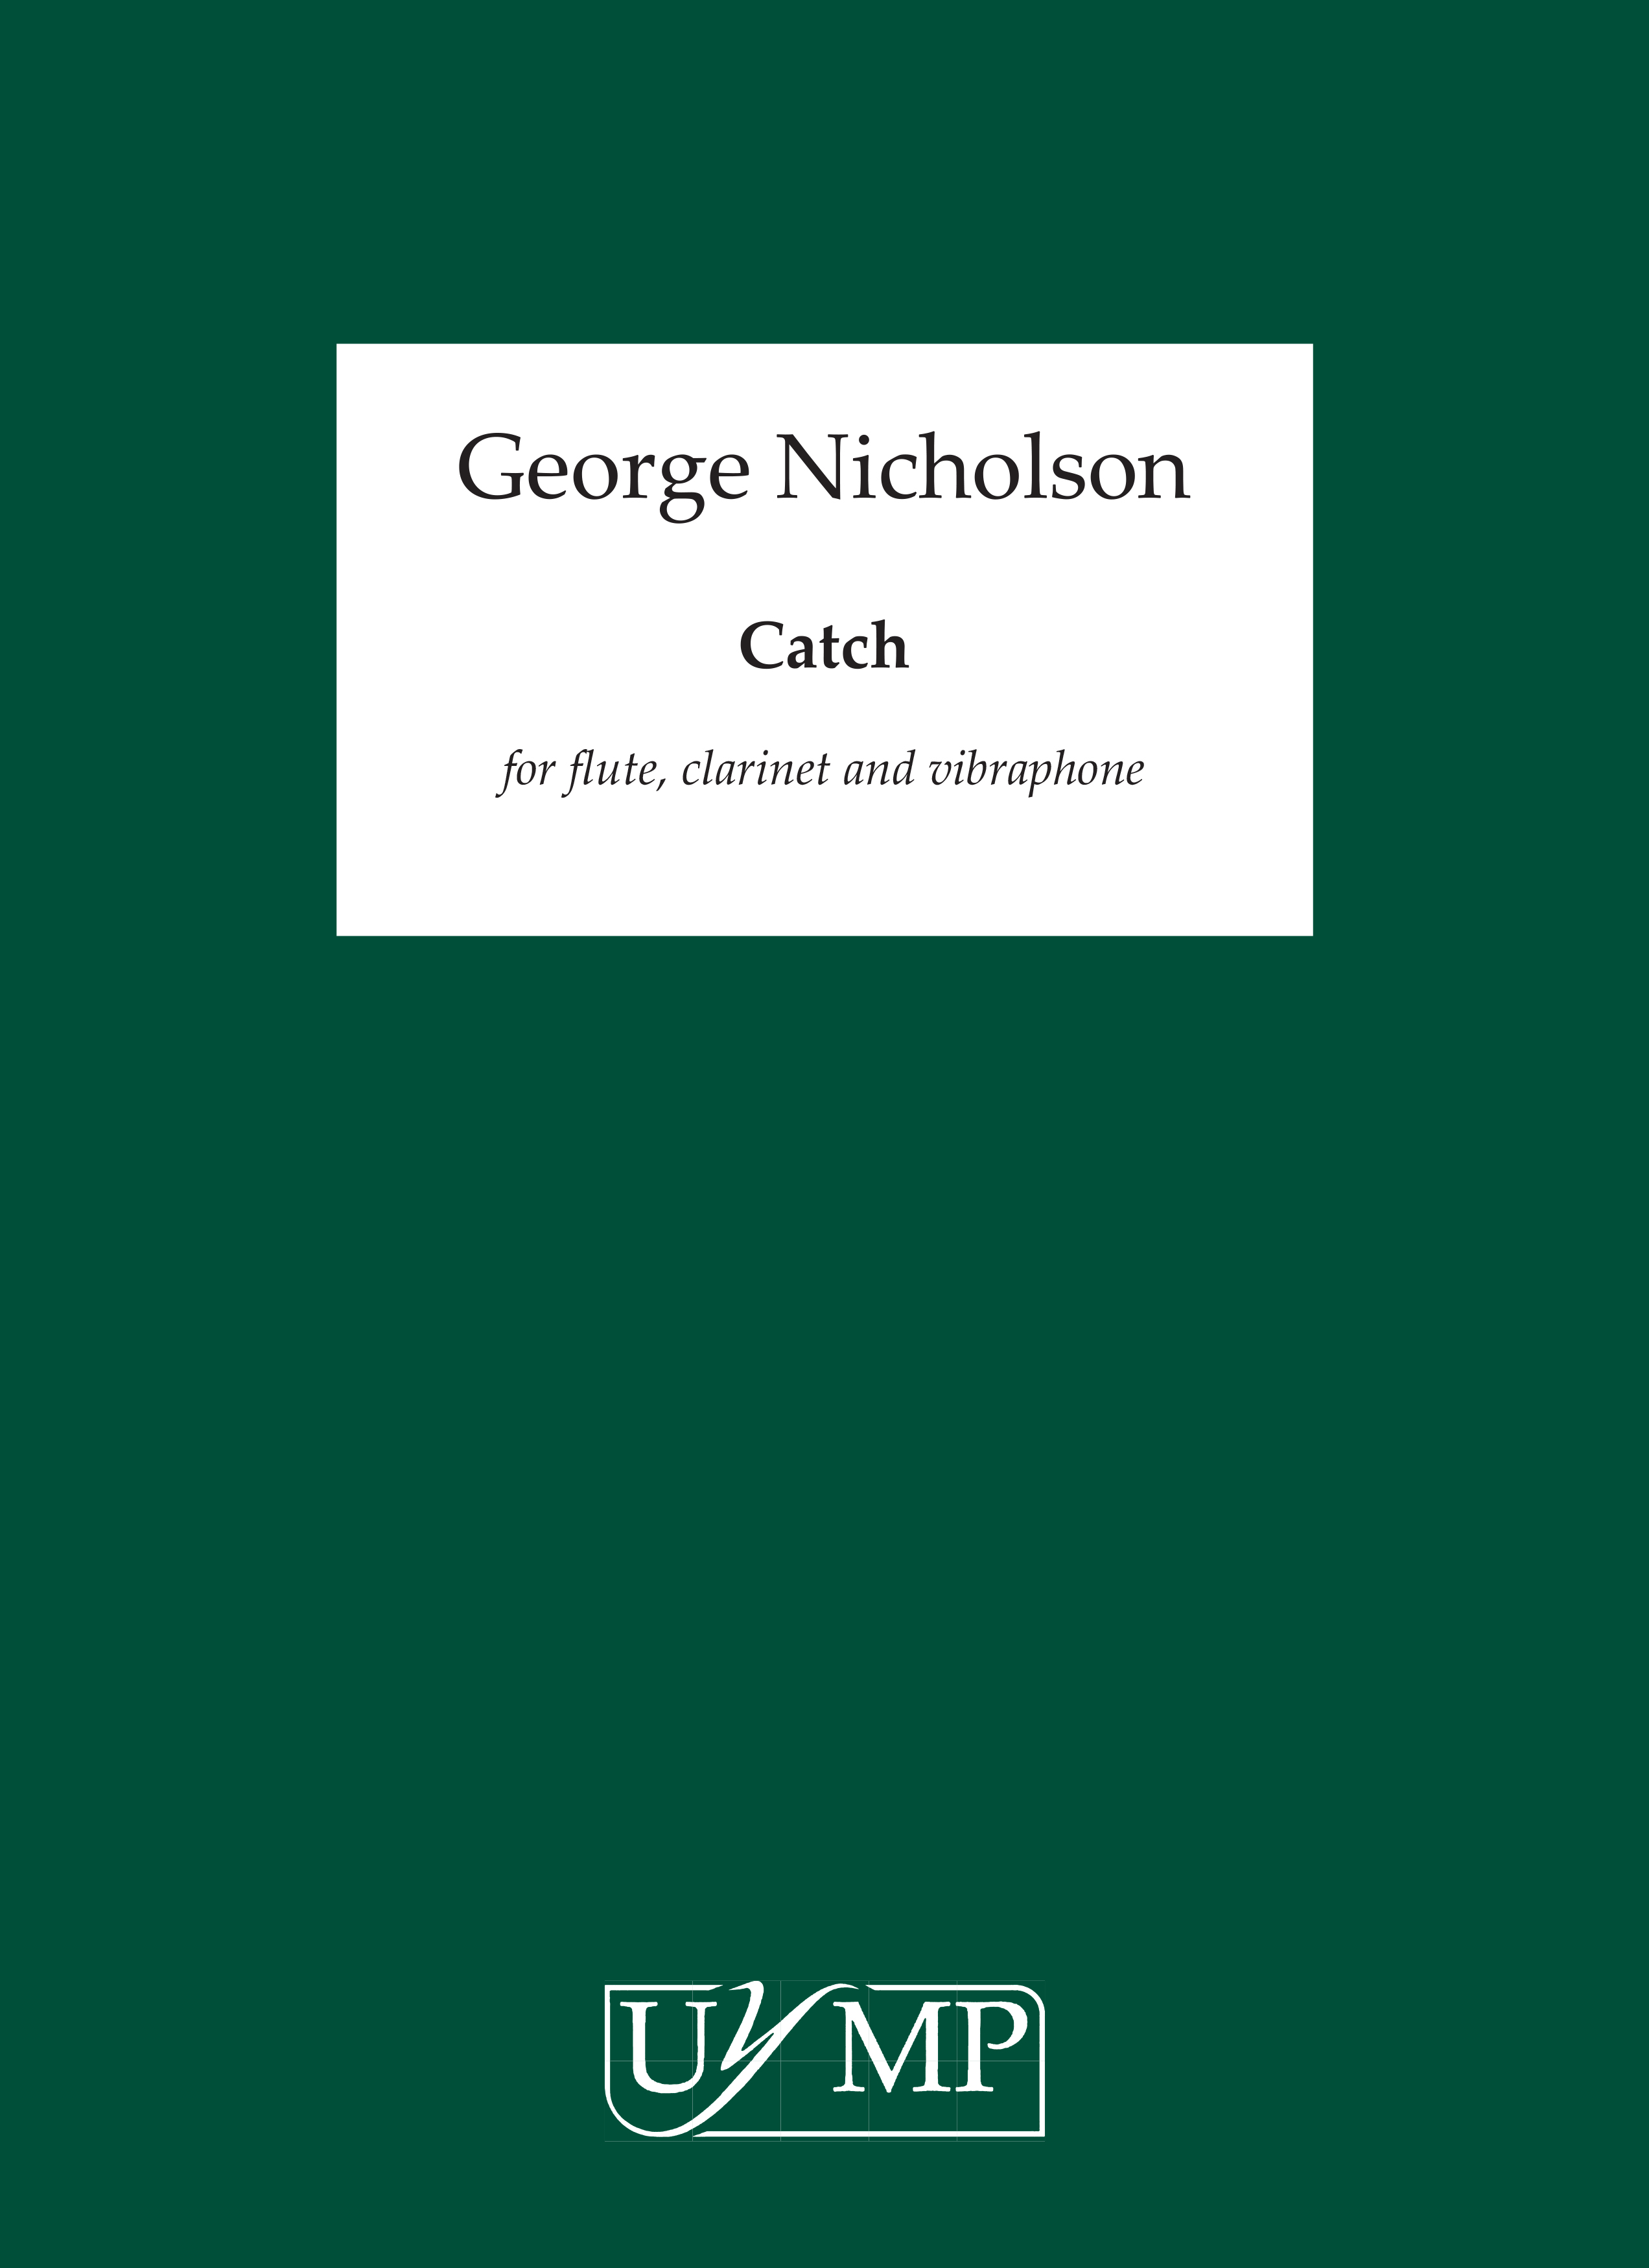 George Nicholson: Catch